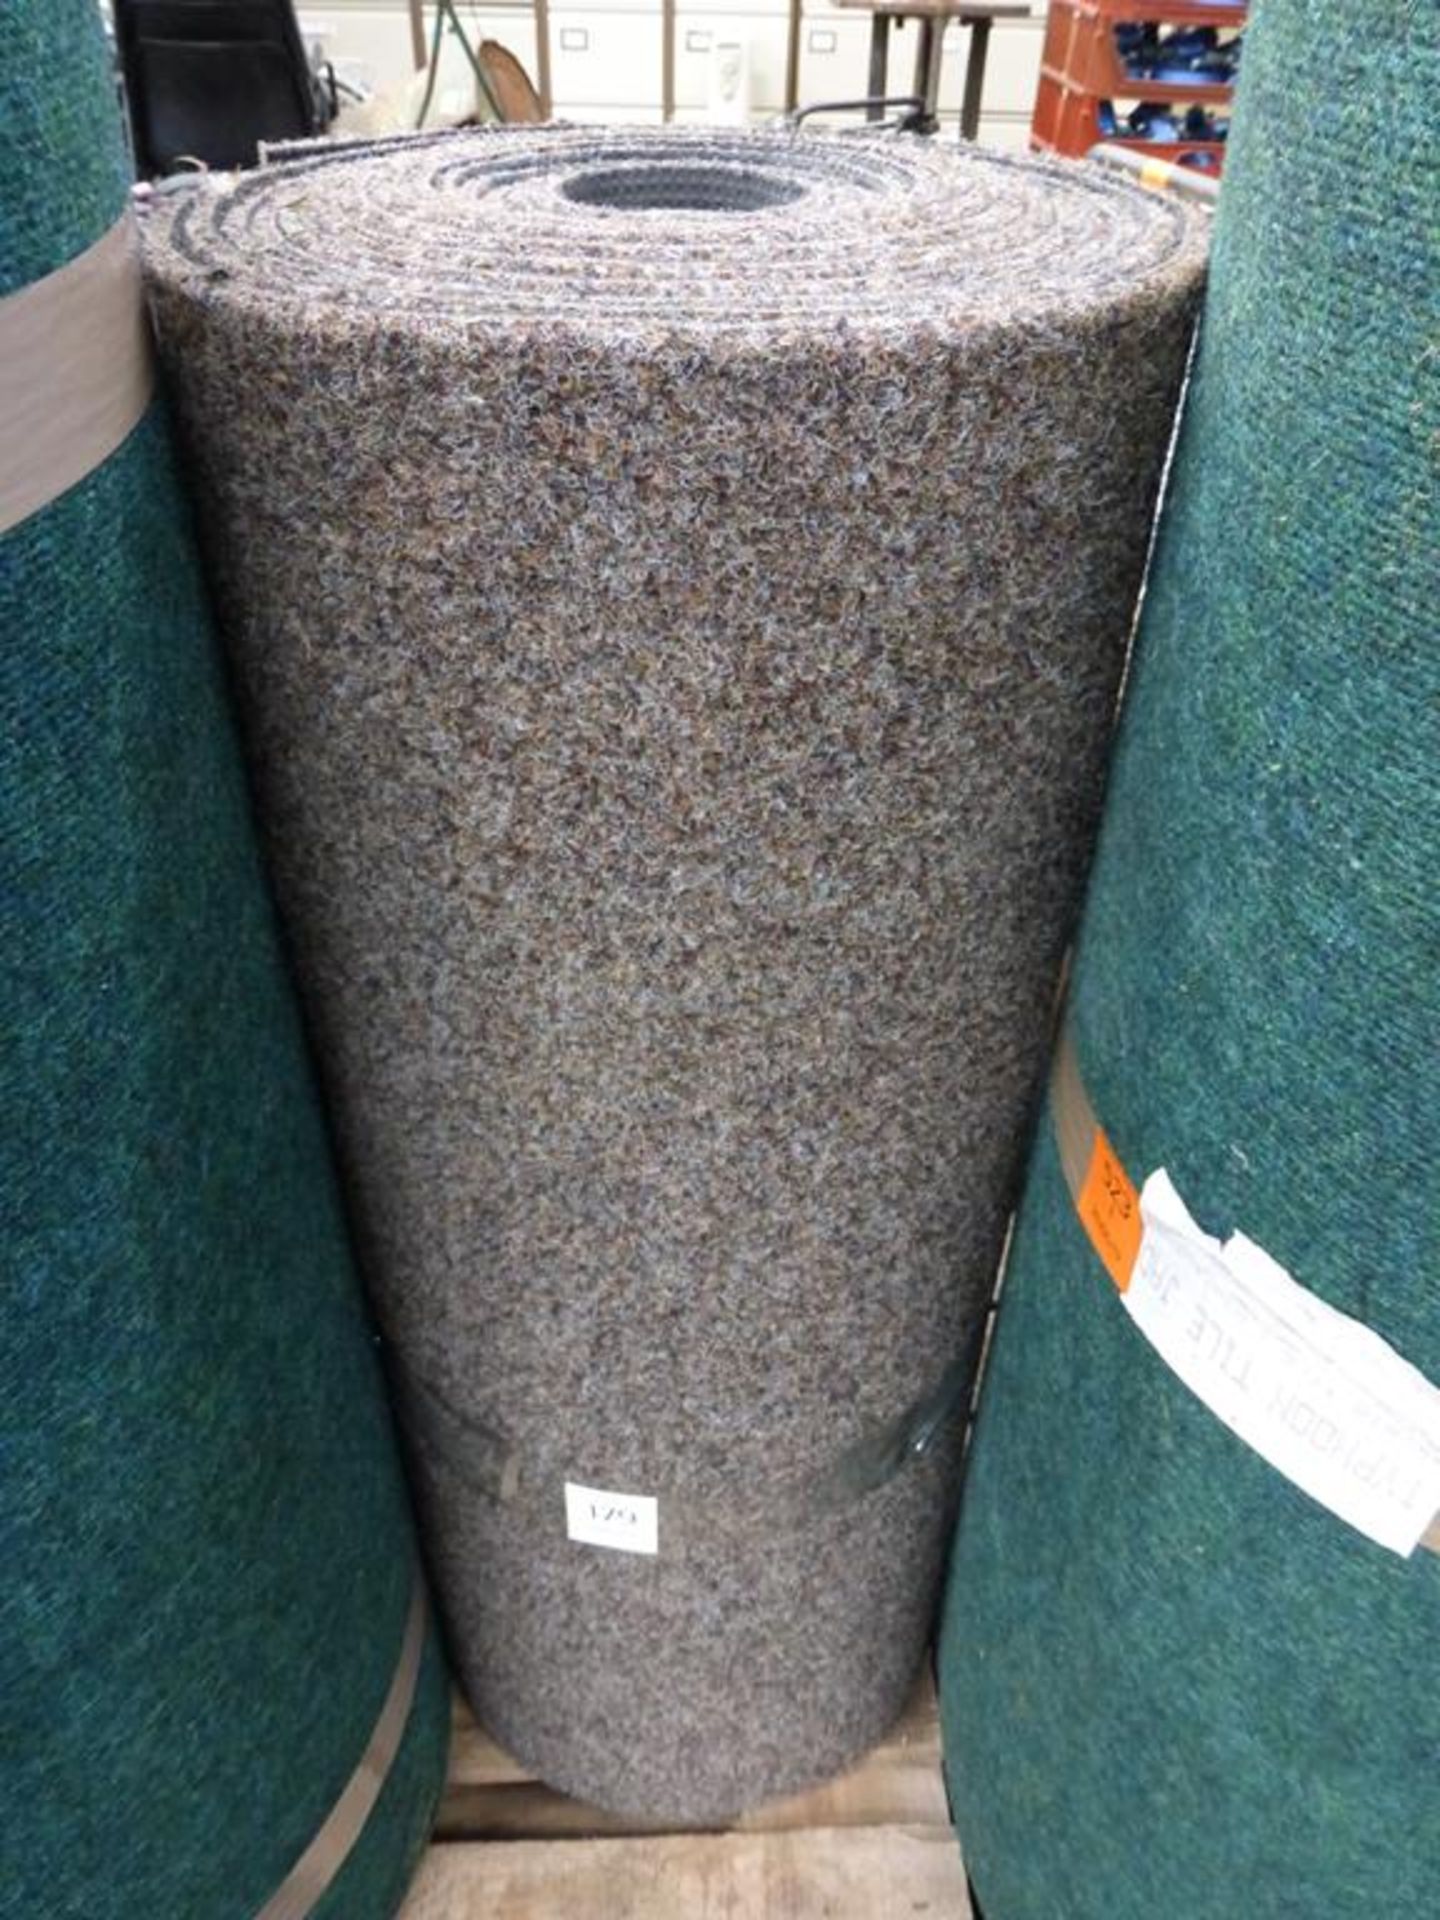 Roll of Brown Industrial Carpet